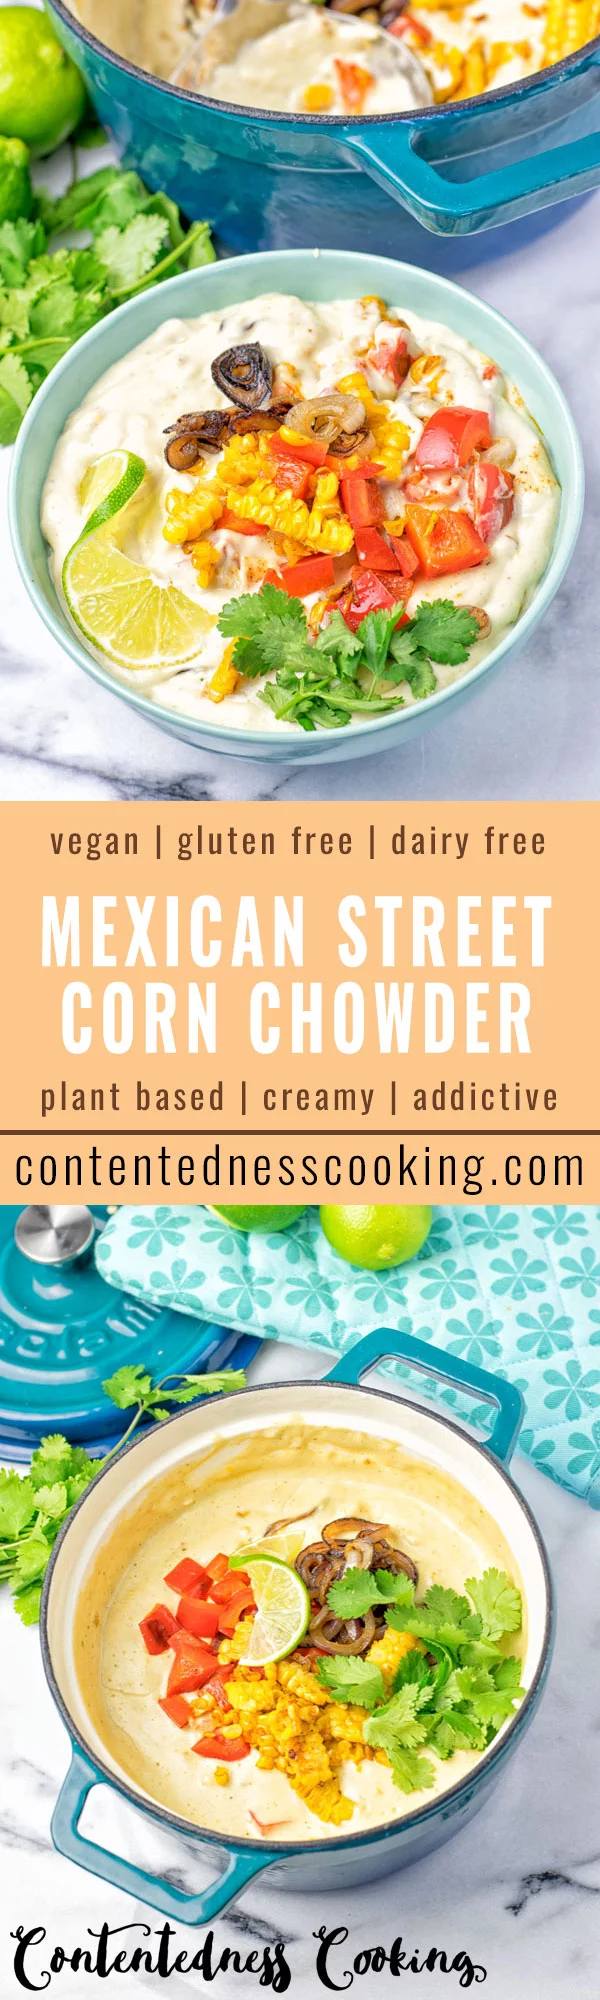 Mexican Street Corn Chowder #vegan #glutenfree #contentednesscooking